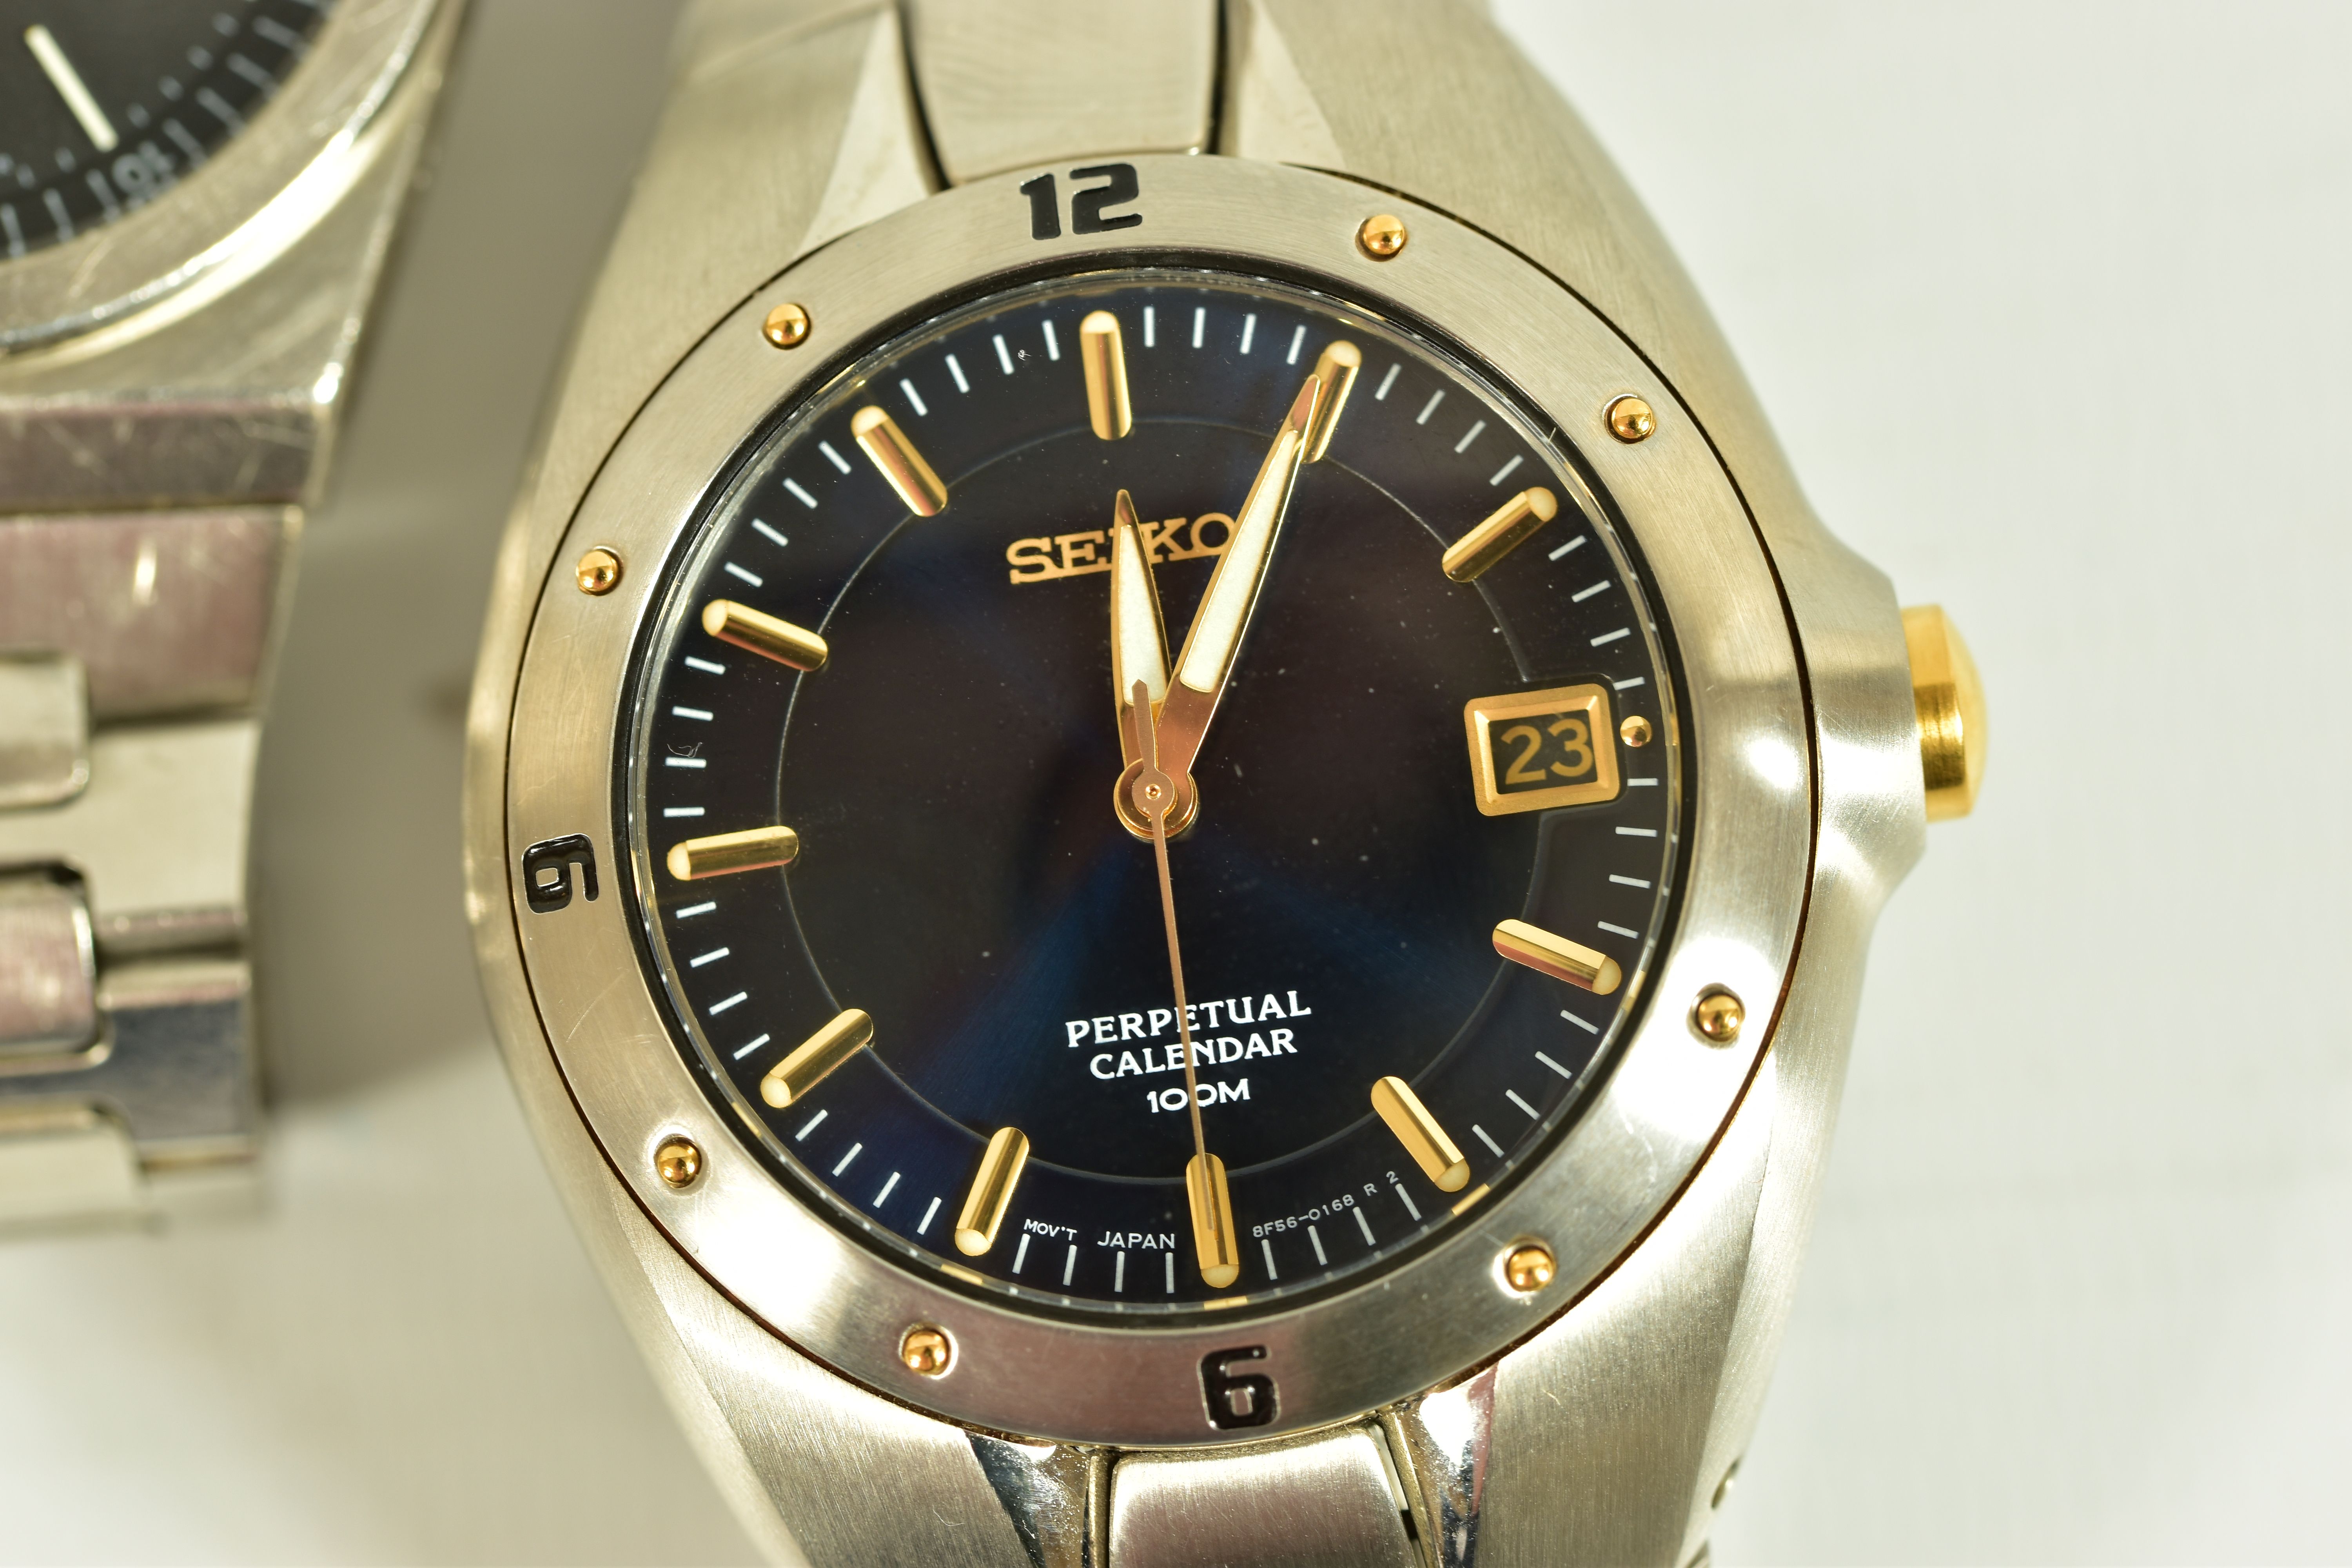 TWO SEIKO WRISTWATCHES, the first a Seiko perpetual calendar watch, dark blue dial with gold - Bild 3 aus 6